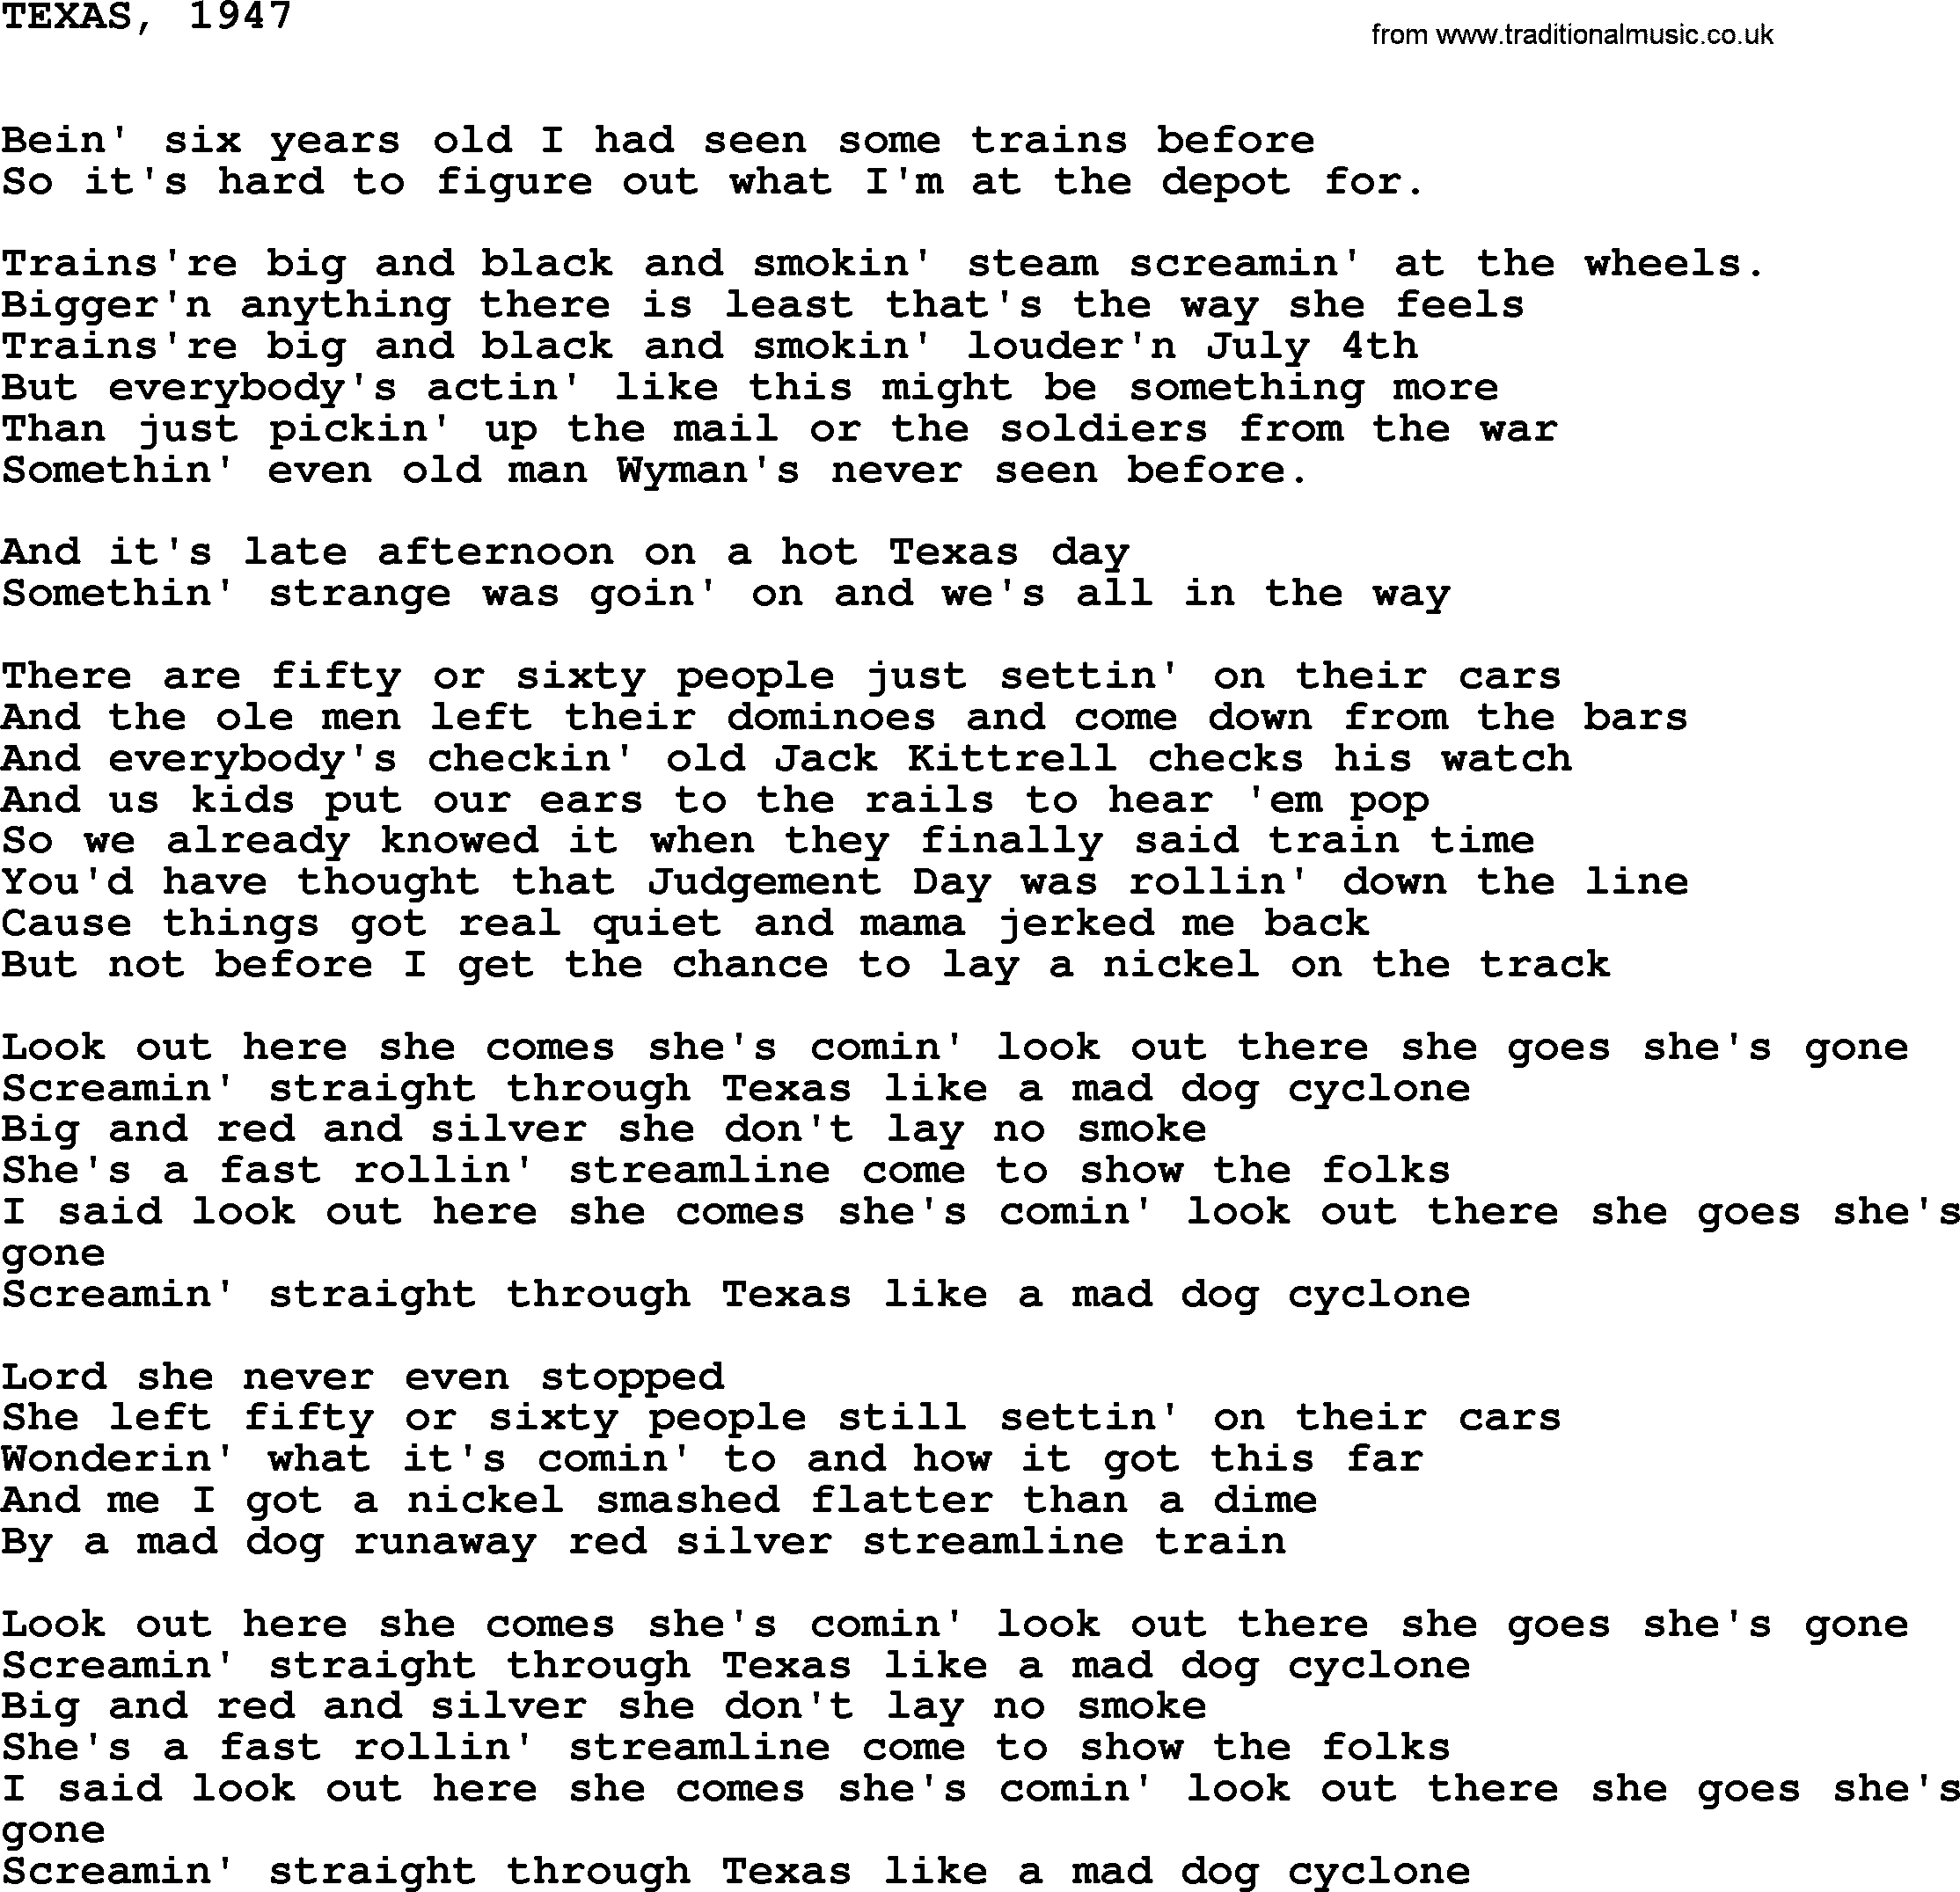 Johnny Cash song Texas, 1947.txt lyrics